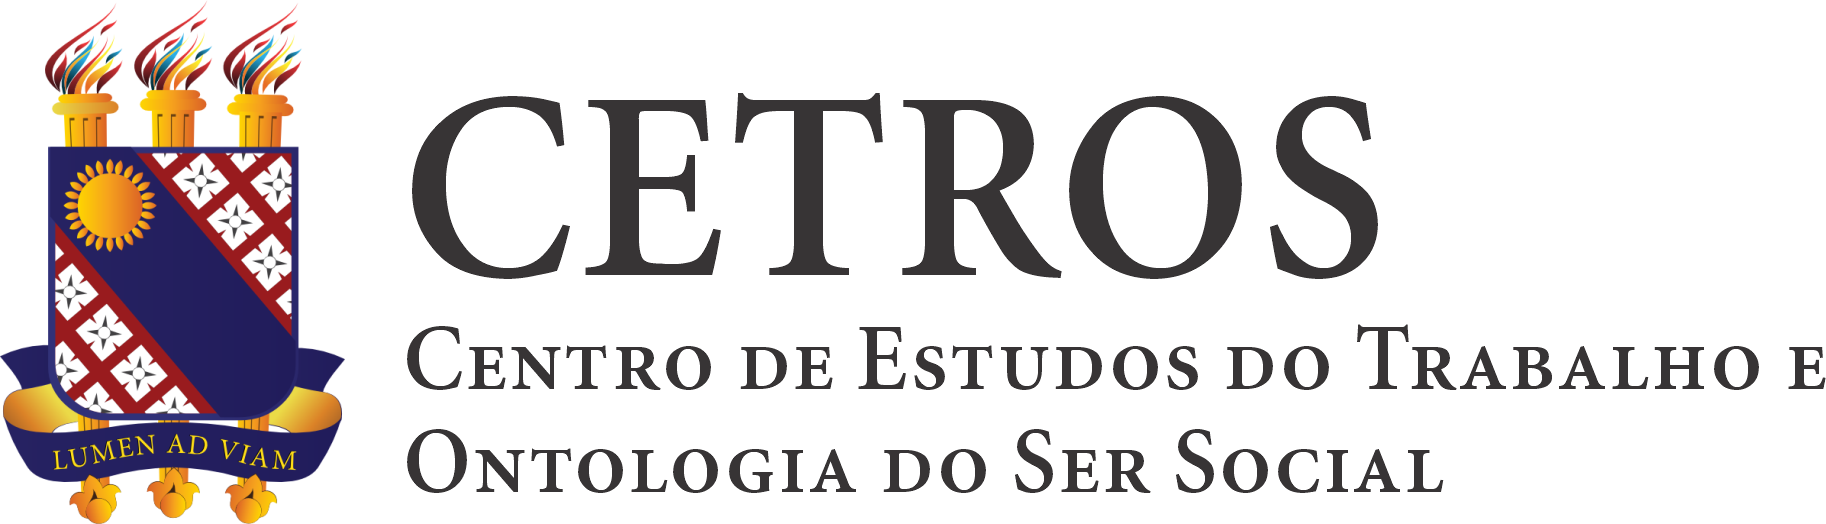 Logo Cetros